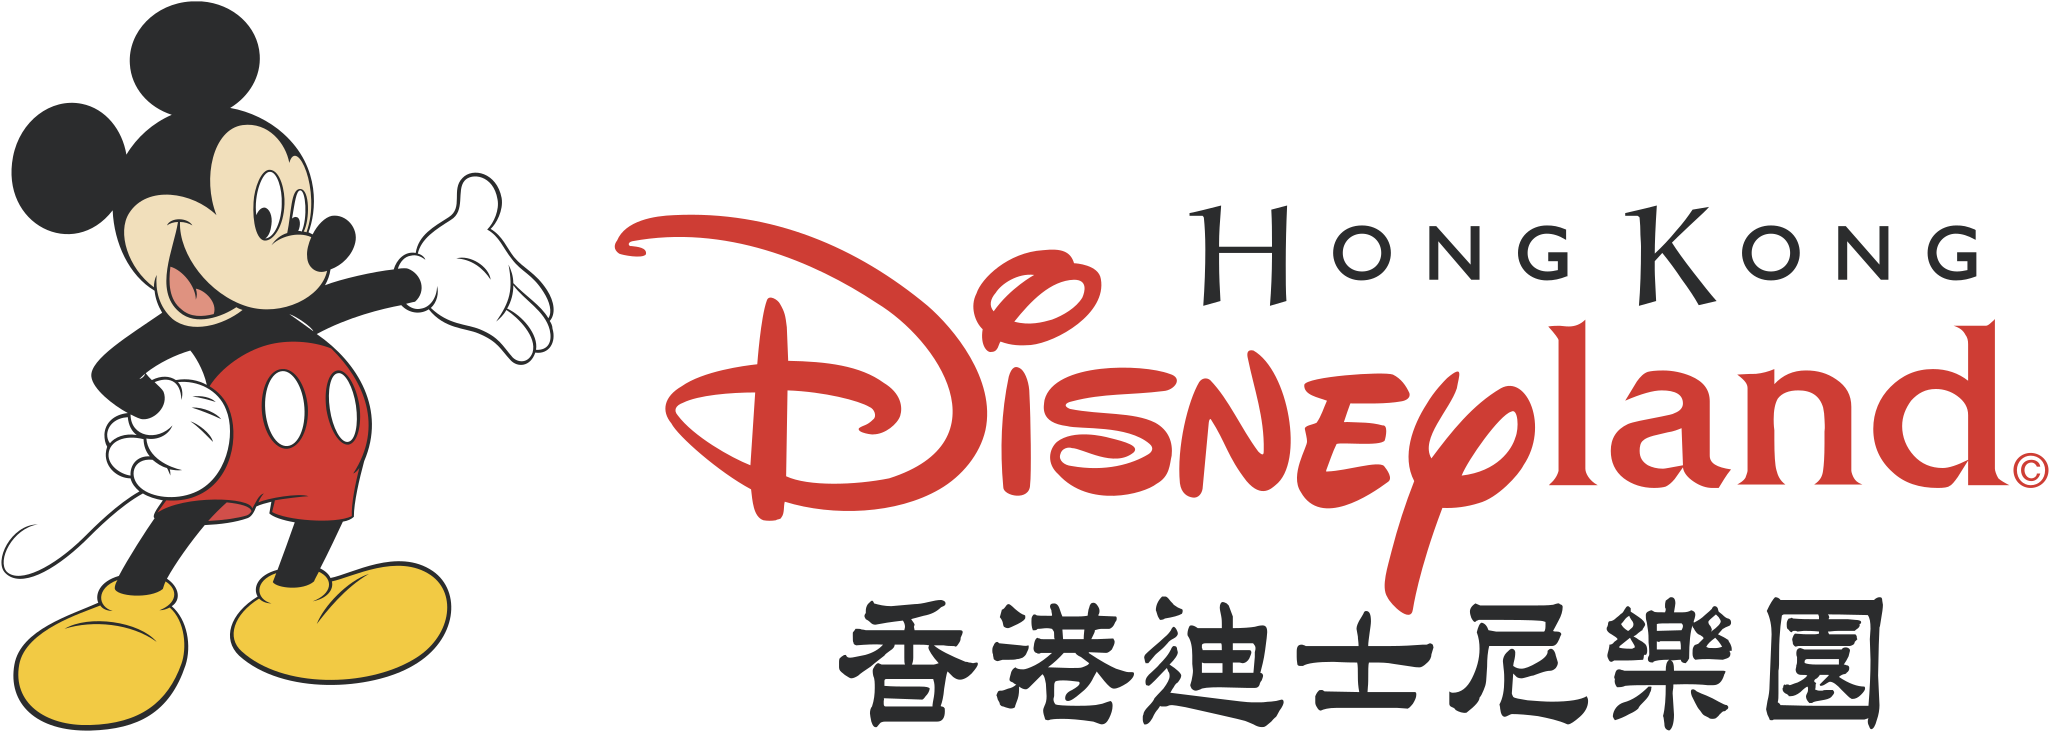 Disneyland Hong Kong Logo Png Transparent - Hong Kong Disneyland Logo Png Clipart (2400x2400), Png Download